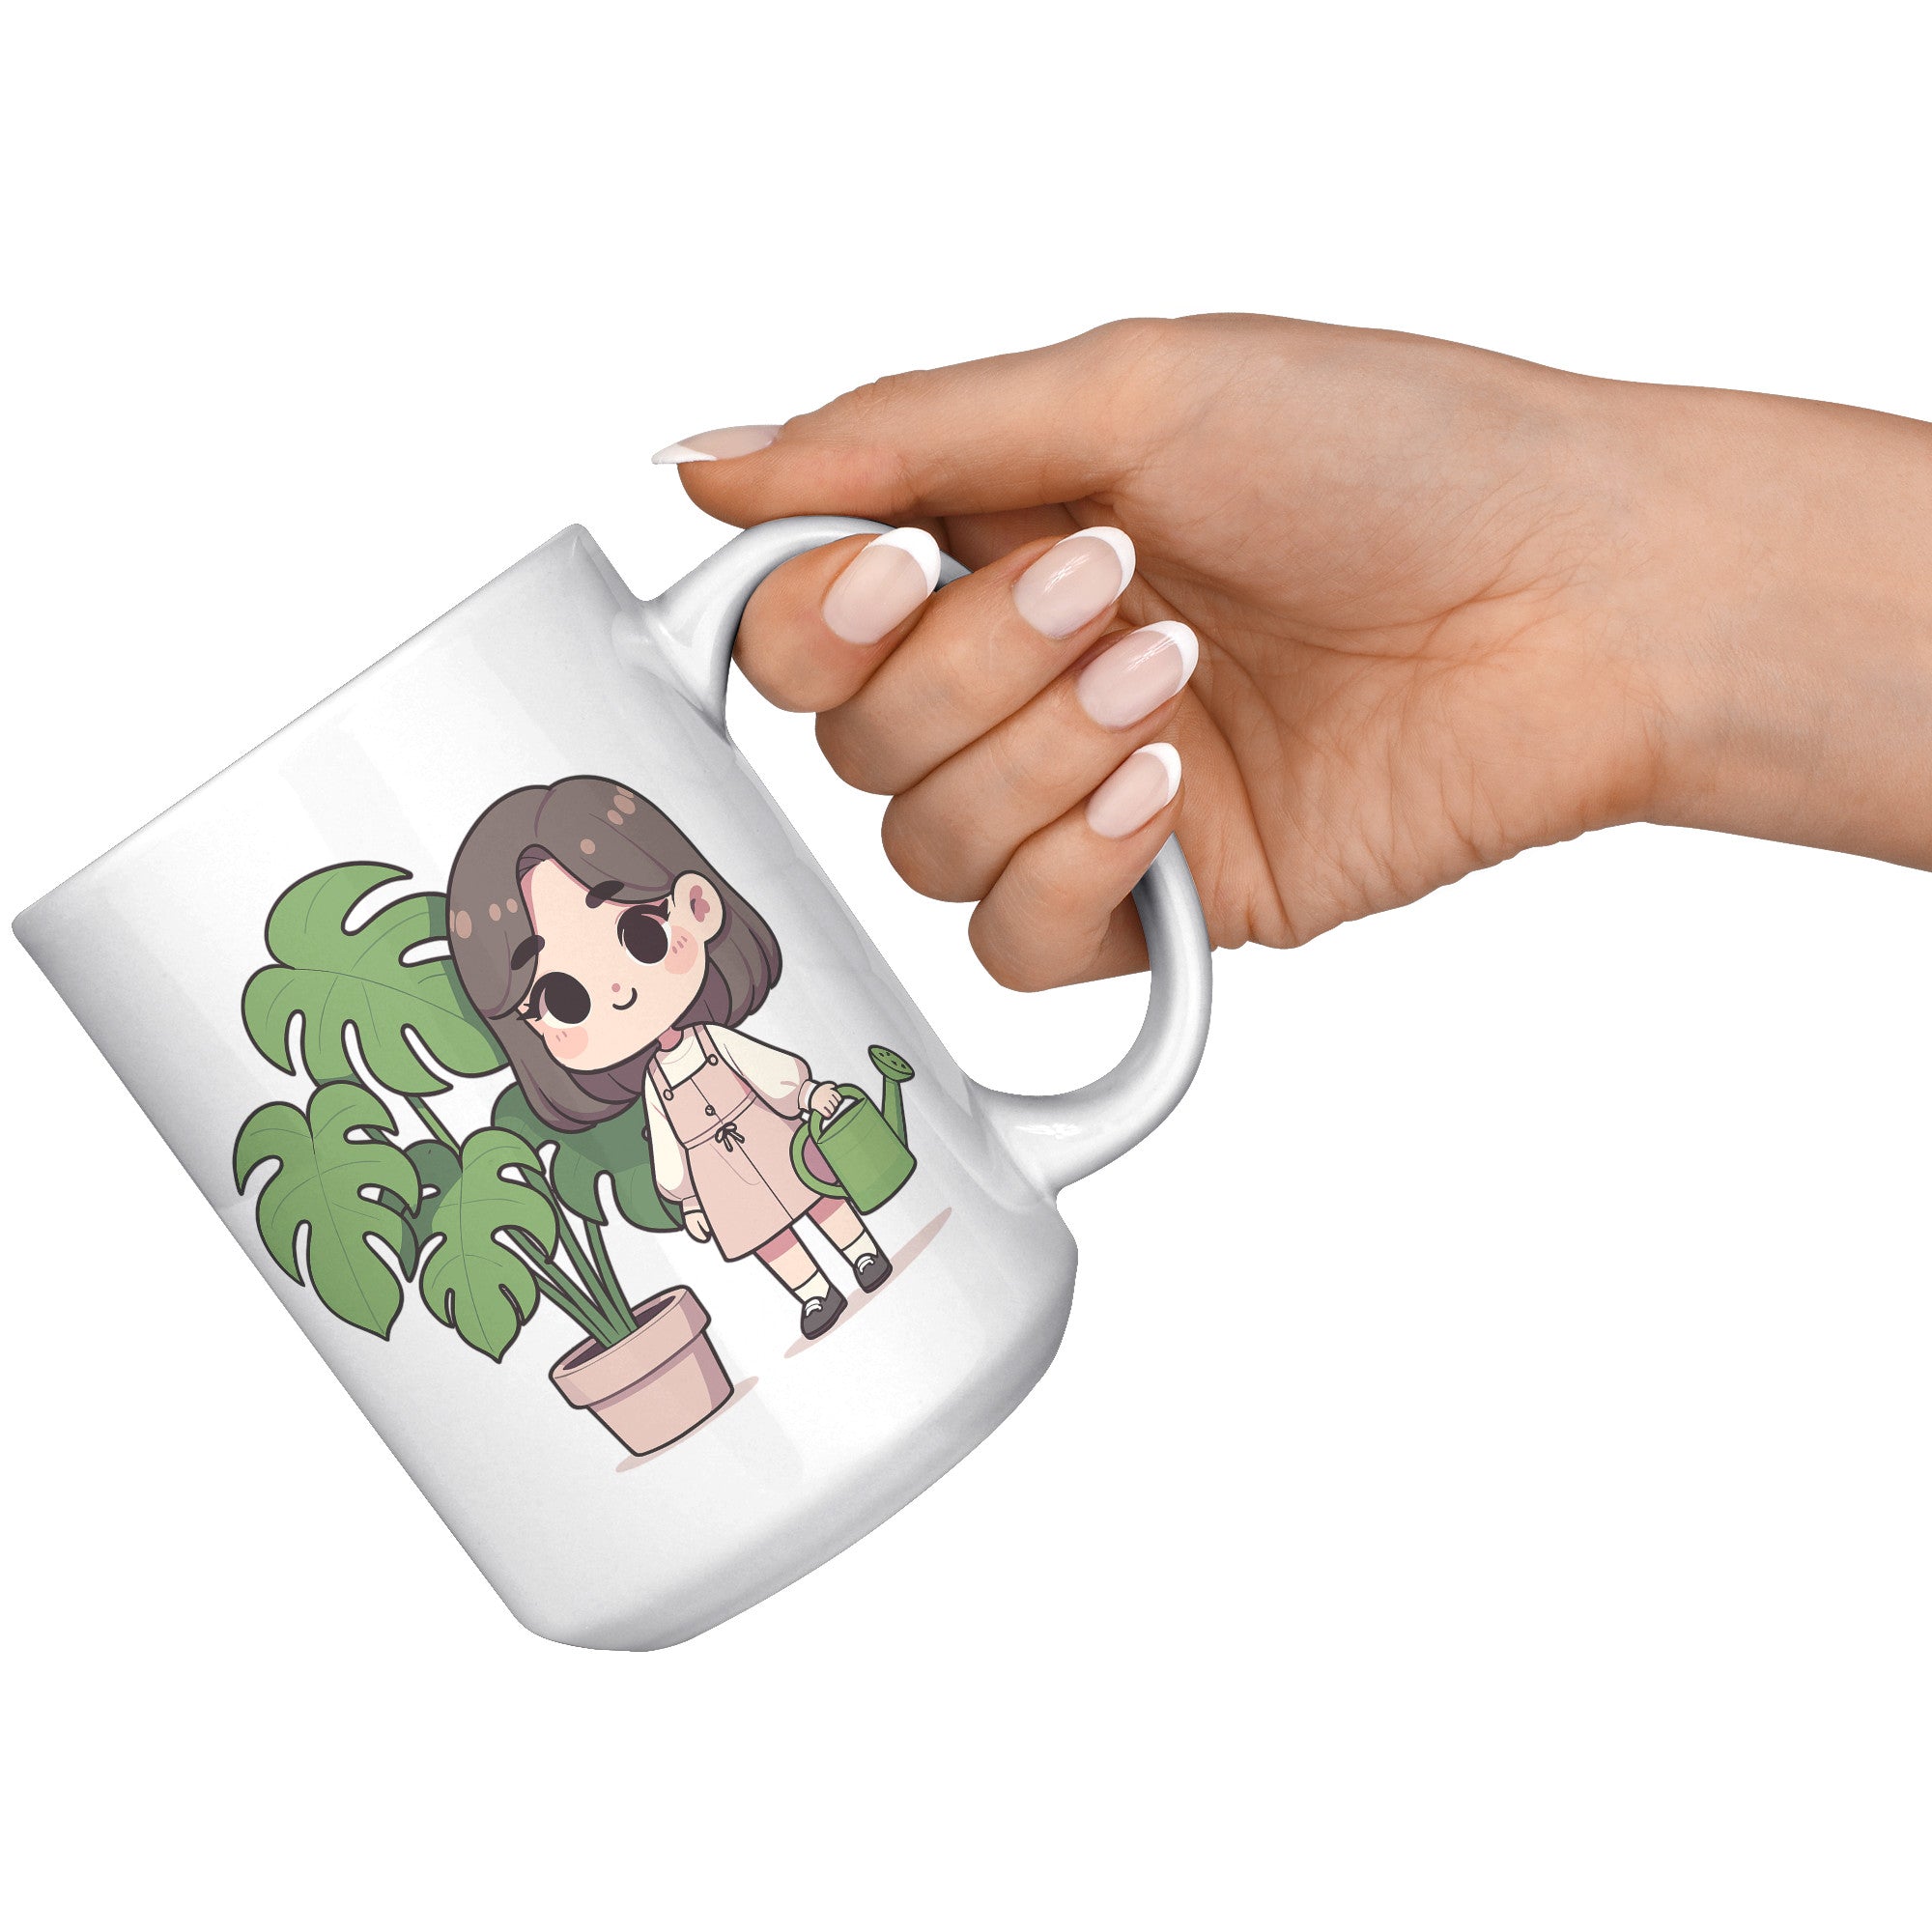 Plantita Coffee Mug - Cartoon Plant Lover Cup - Perfect Gift for Filipino Plant Moms - Auntie's Gardening Mug - F1